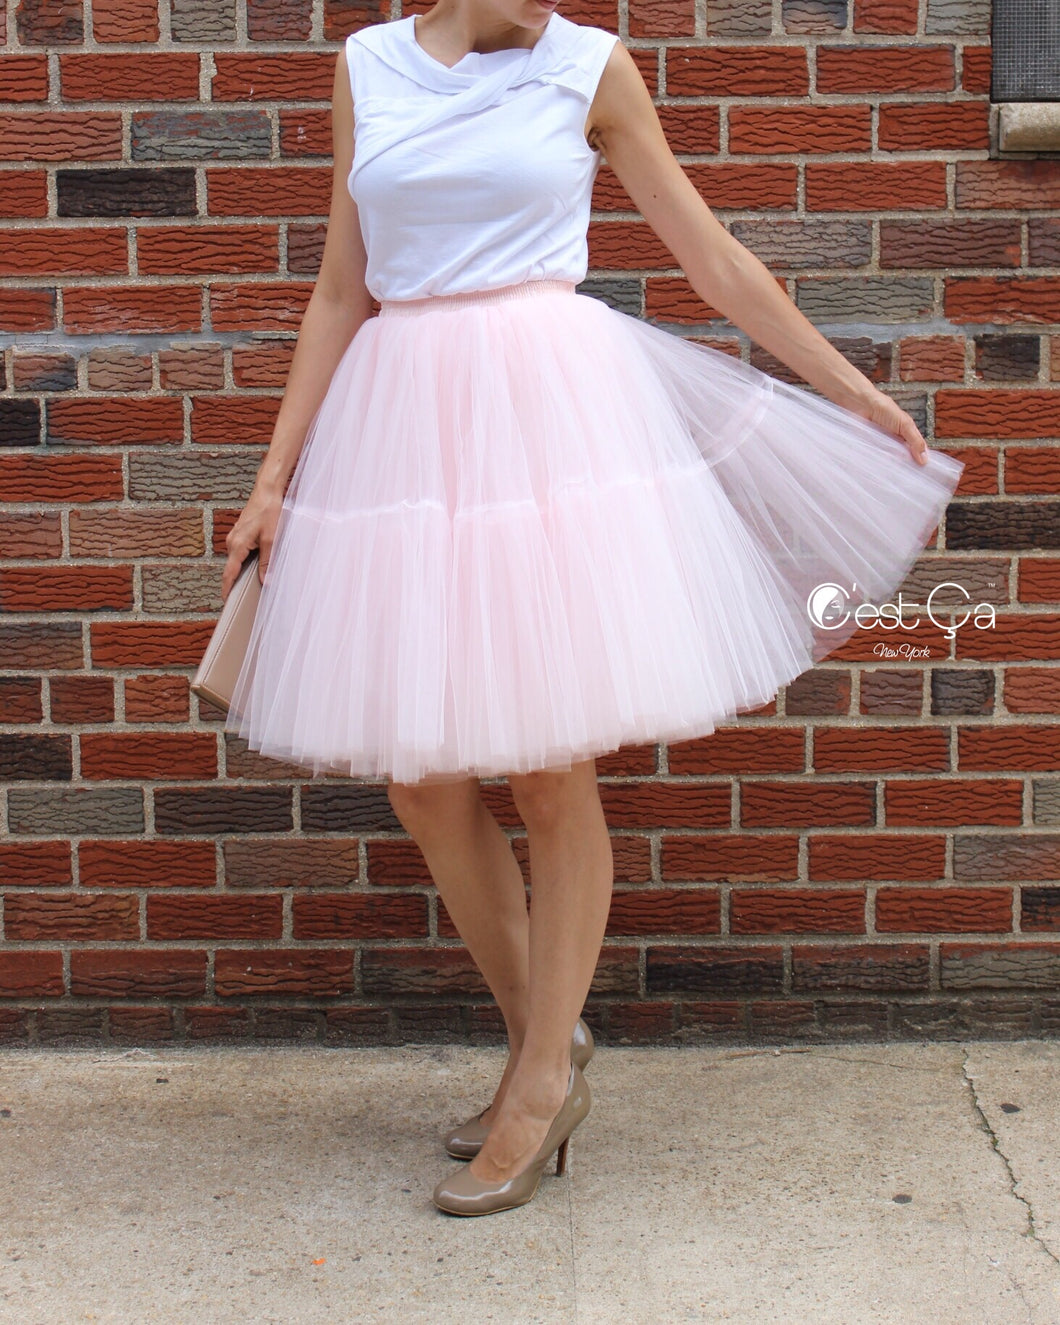 Beatrice Blush Pink Tulle Skirt Midi Cest Ça New York 